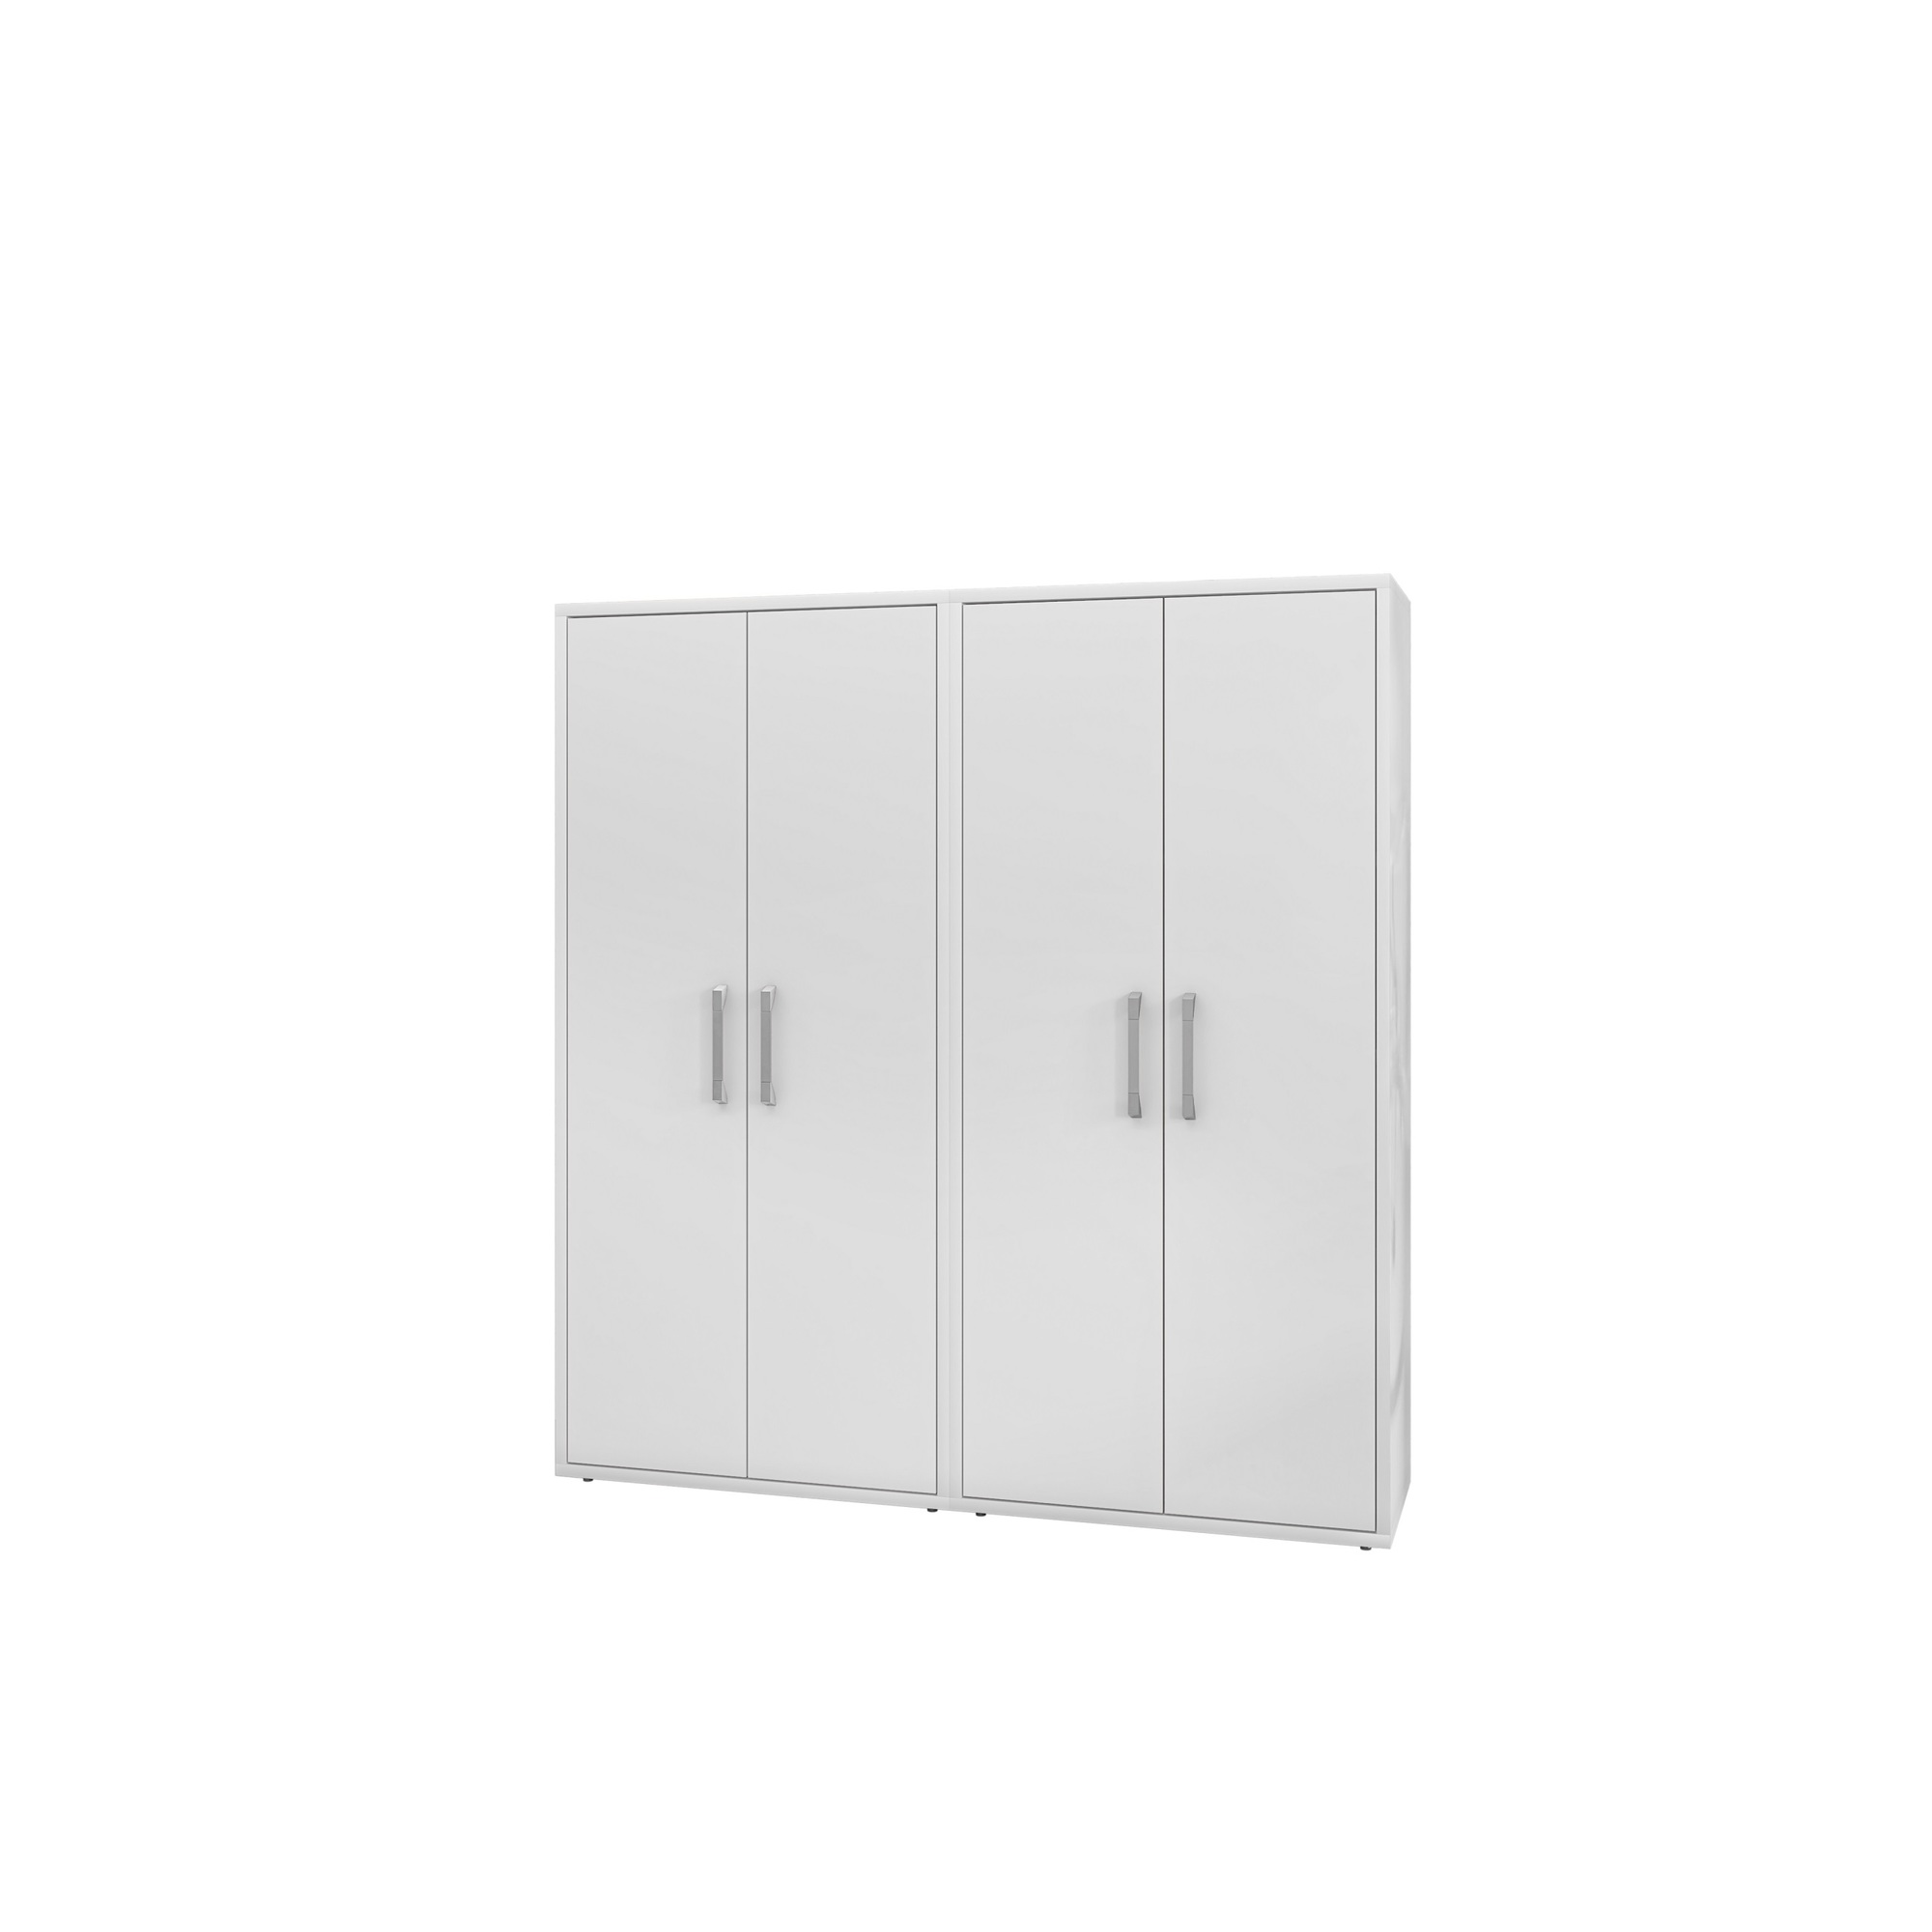 Manhattan Comfort, Eiffel Storage Cabinet in White, Set of 2 Height 73.43 in, Width 70.86 in, Color White, Model 2-250BMC